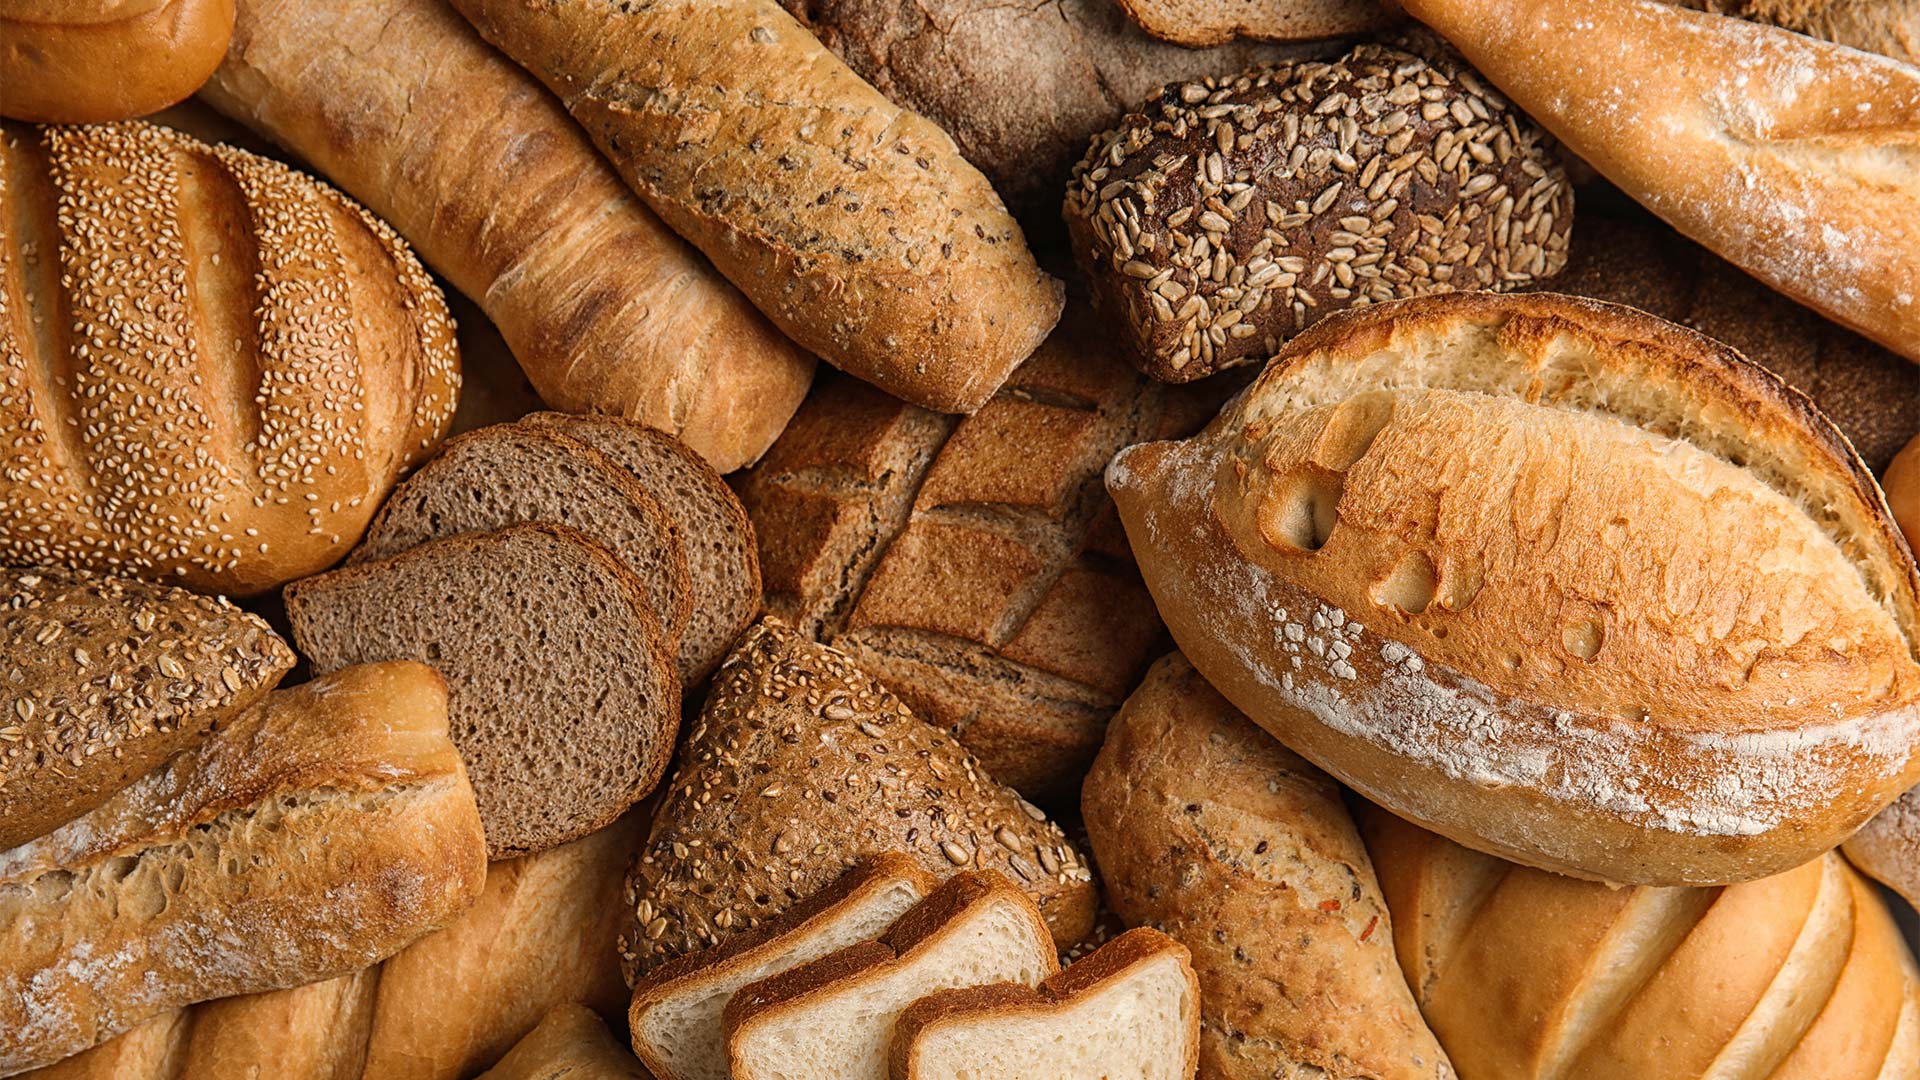 Different kinds of fresh bread bundled